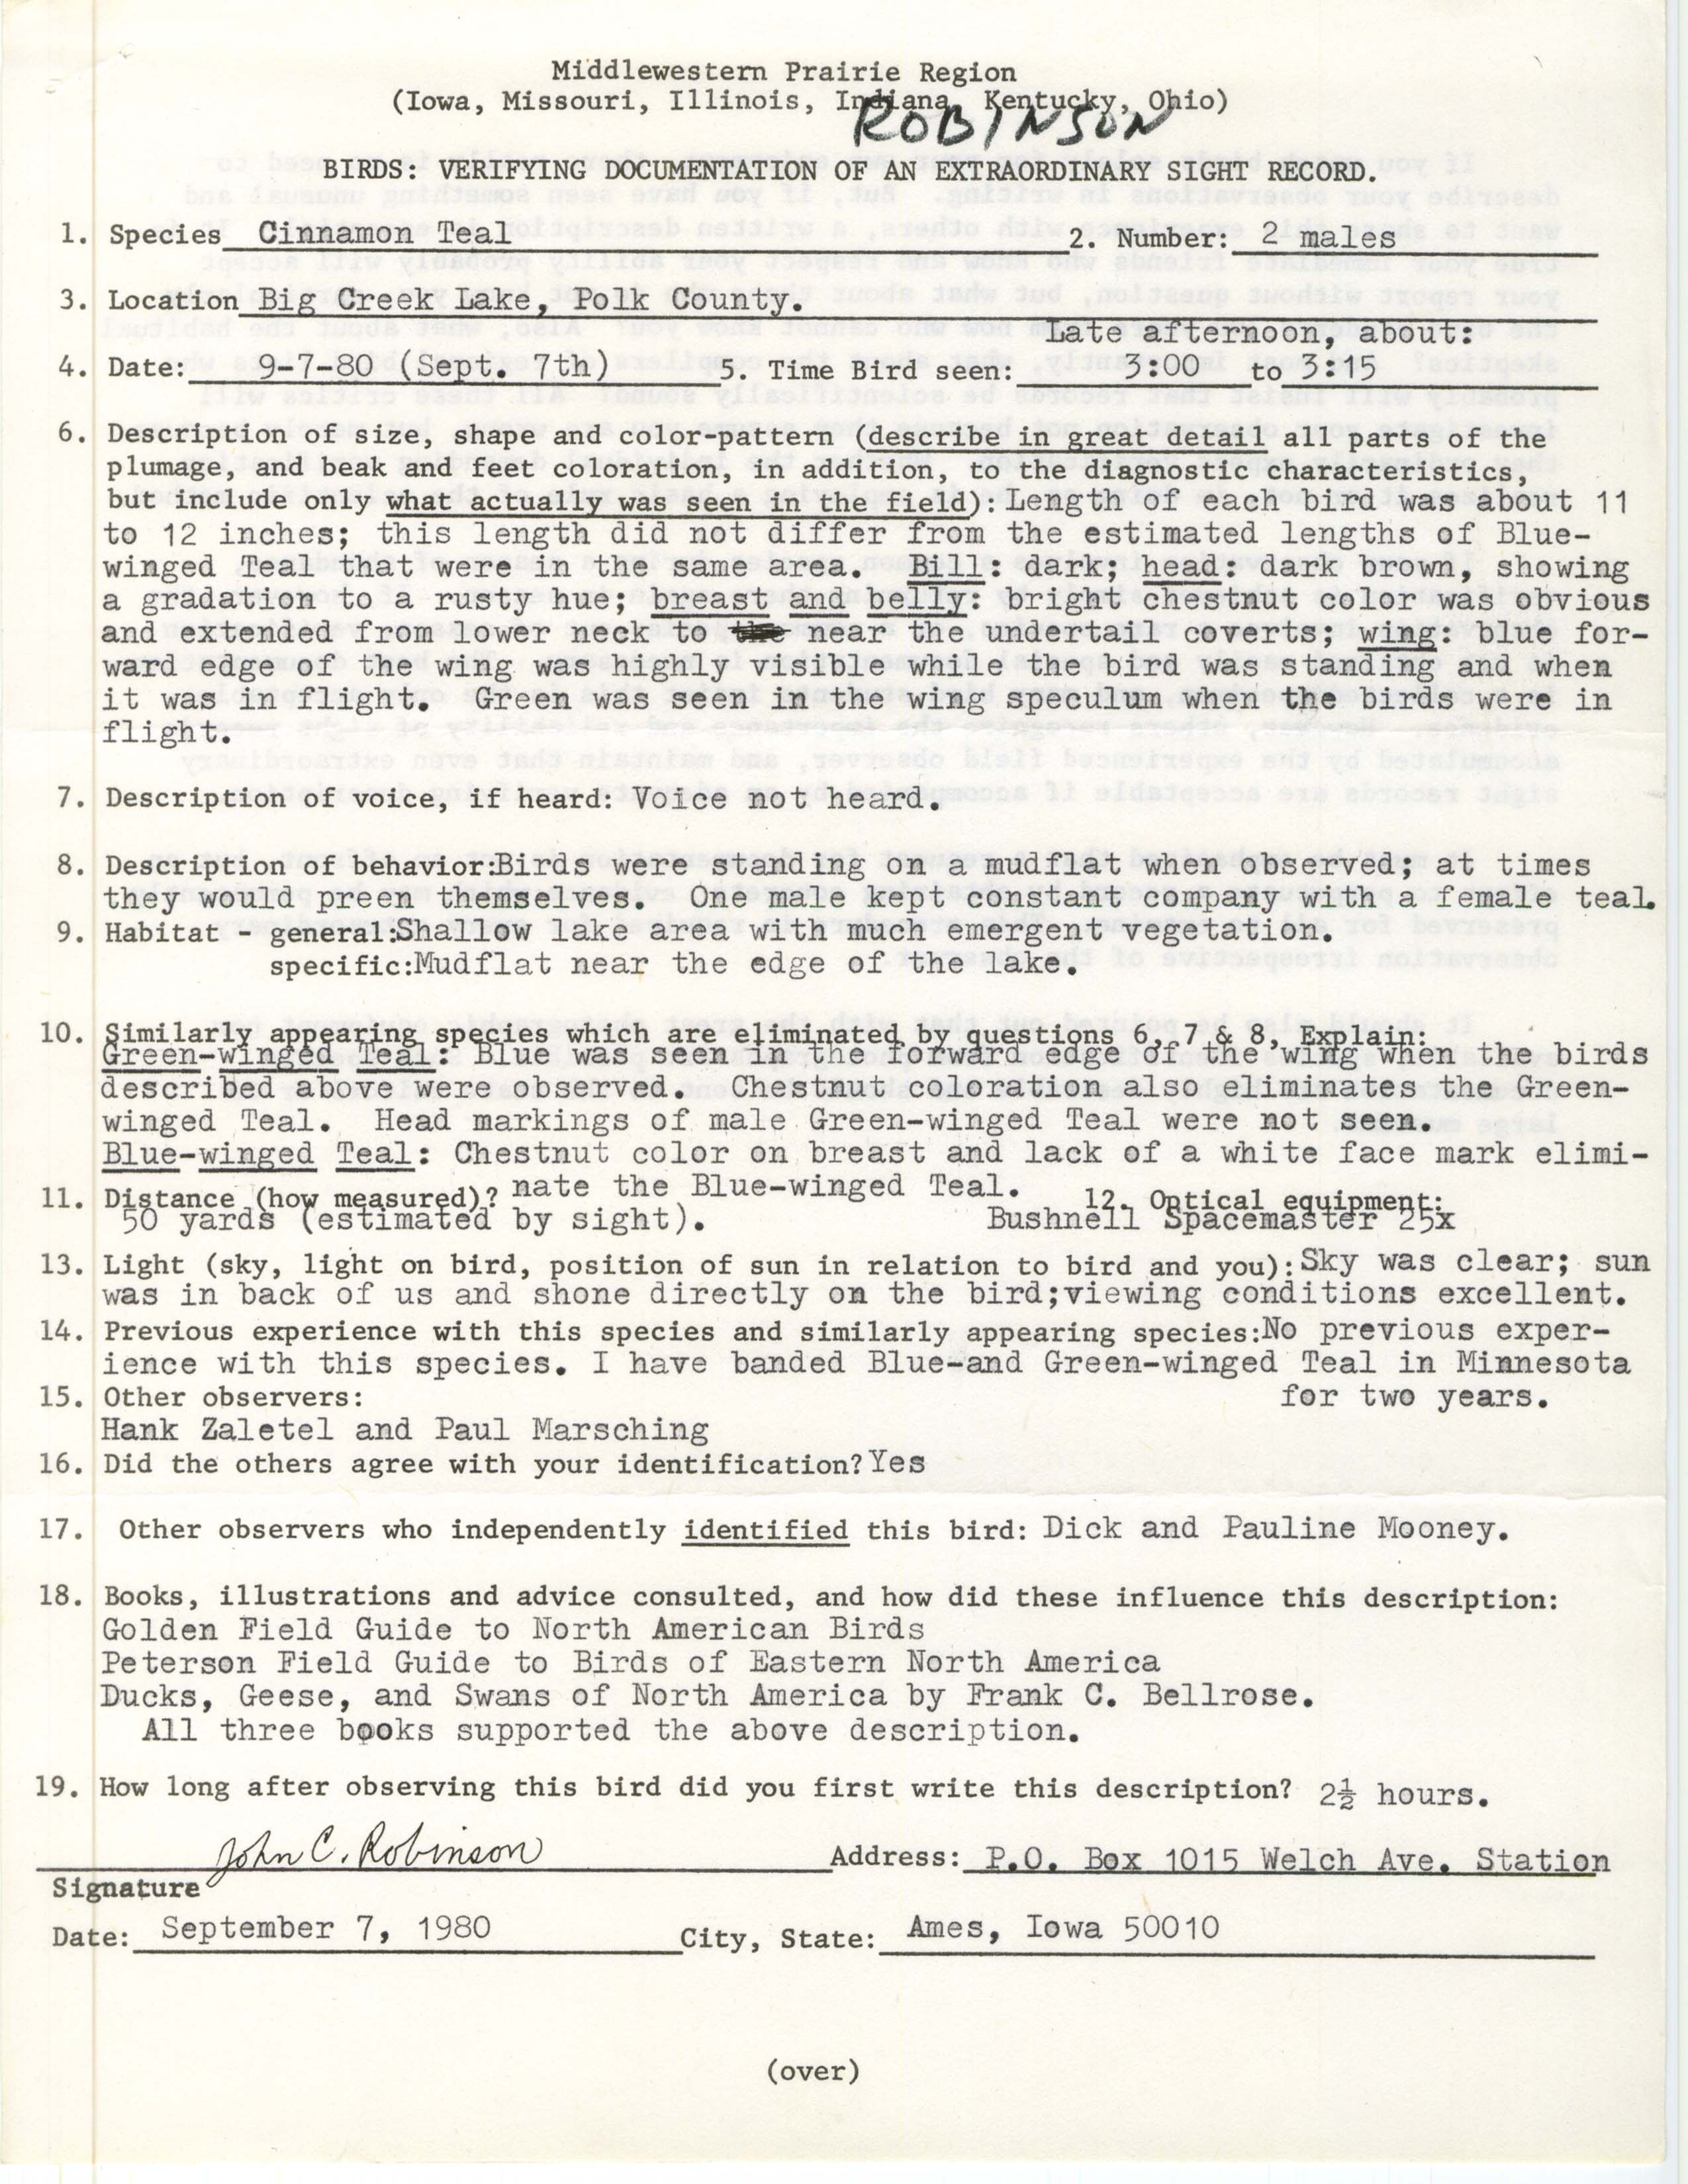 Rare bird documentation form for Cinnamon Teal at Big Creek Lake, 1980